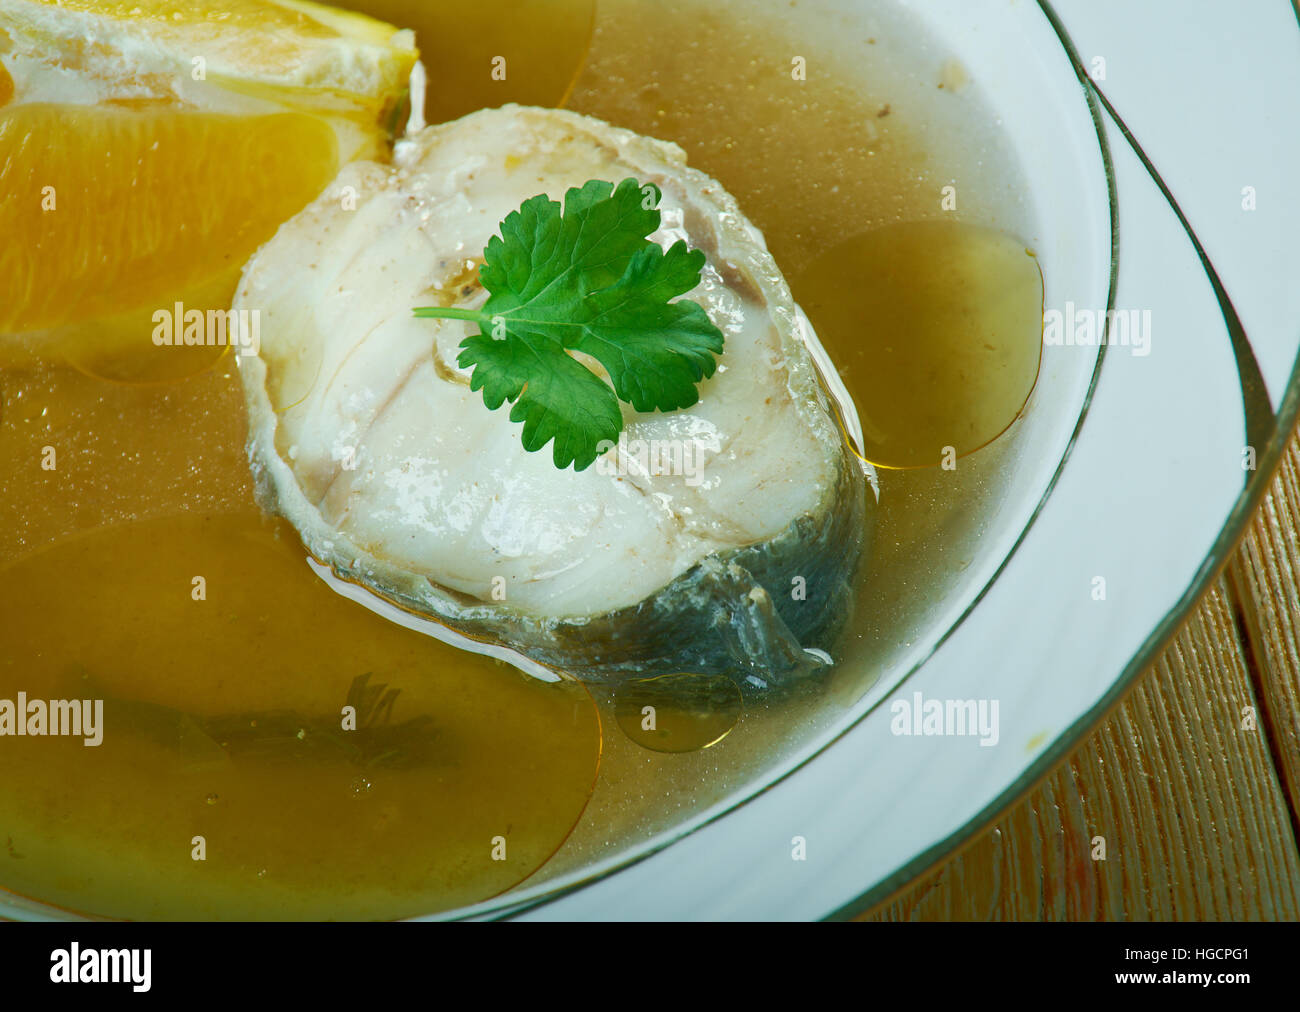 Caldillo de perro - soupe de fruits de mer de l'Andalousie, sud de l'Espagne Banque D'Images